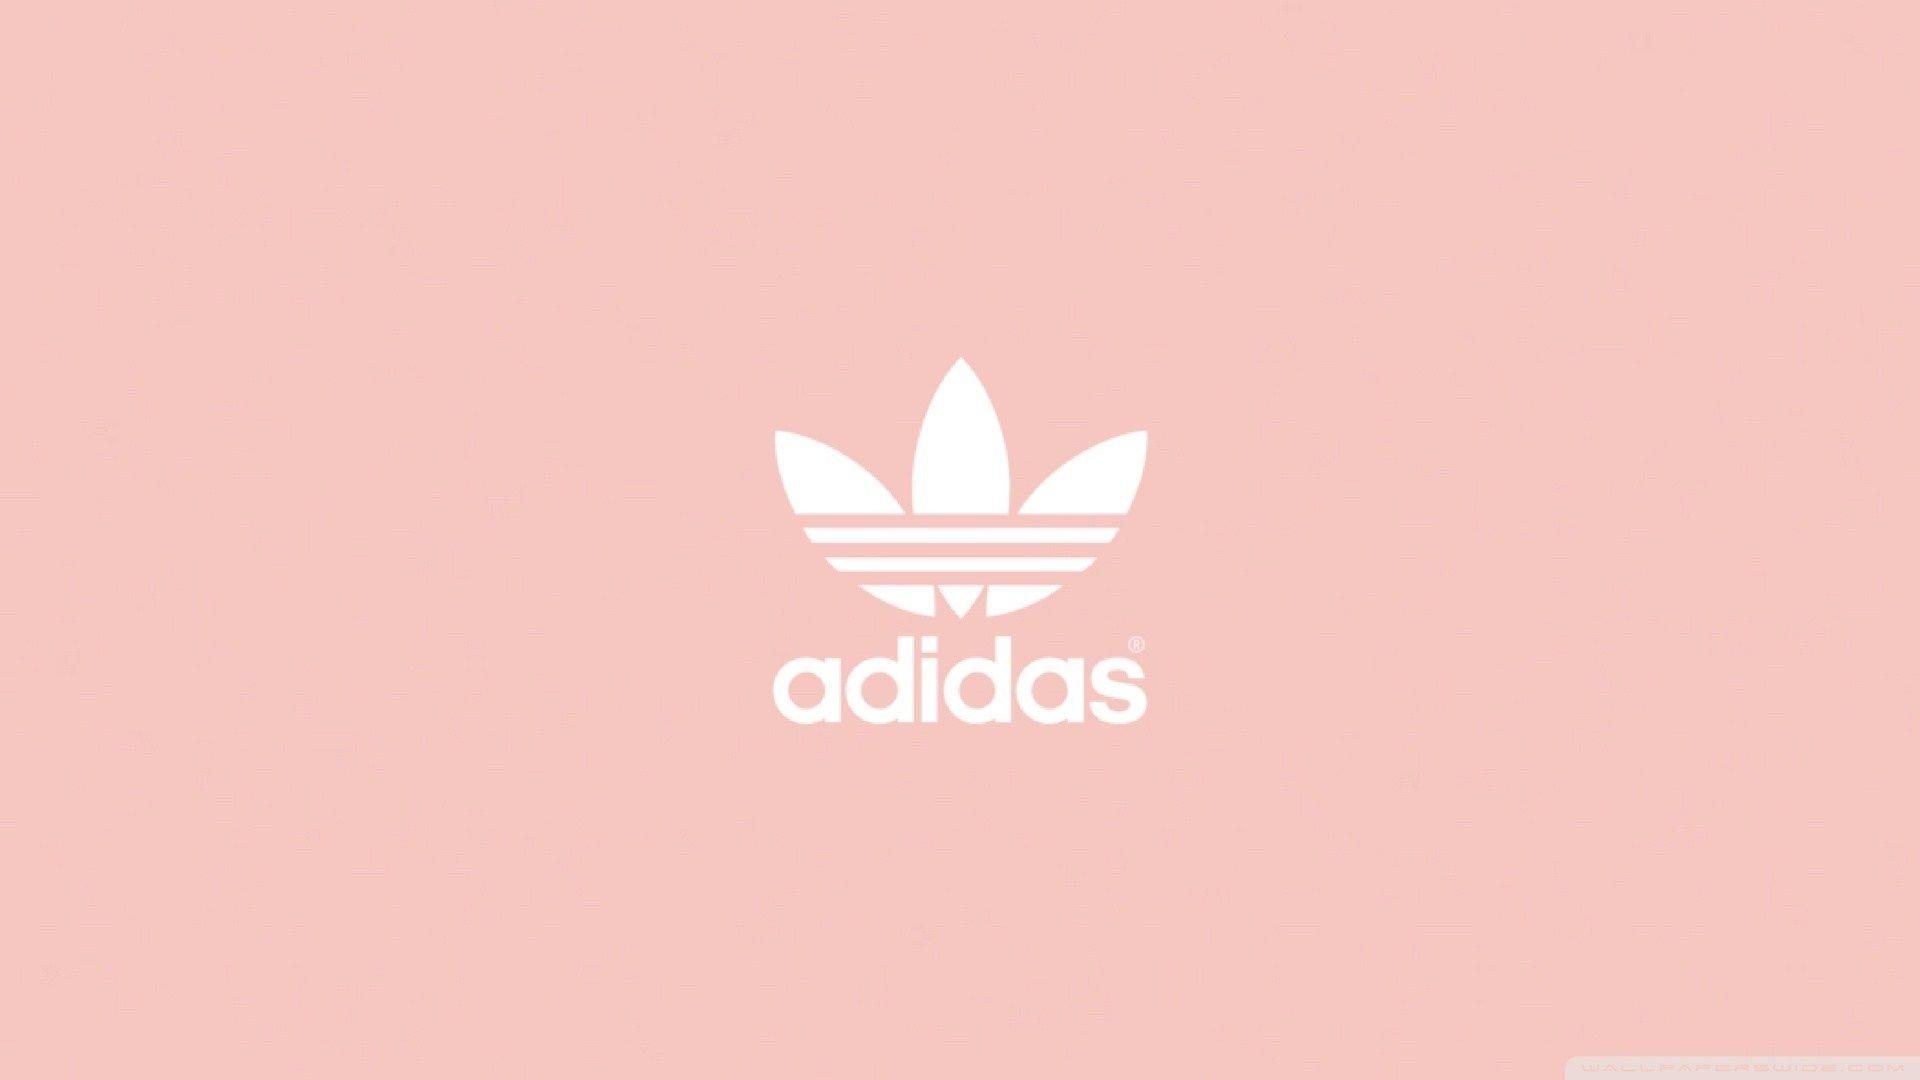 adidas pink